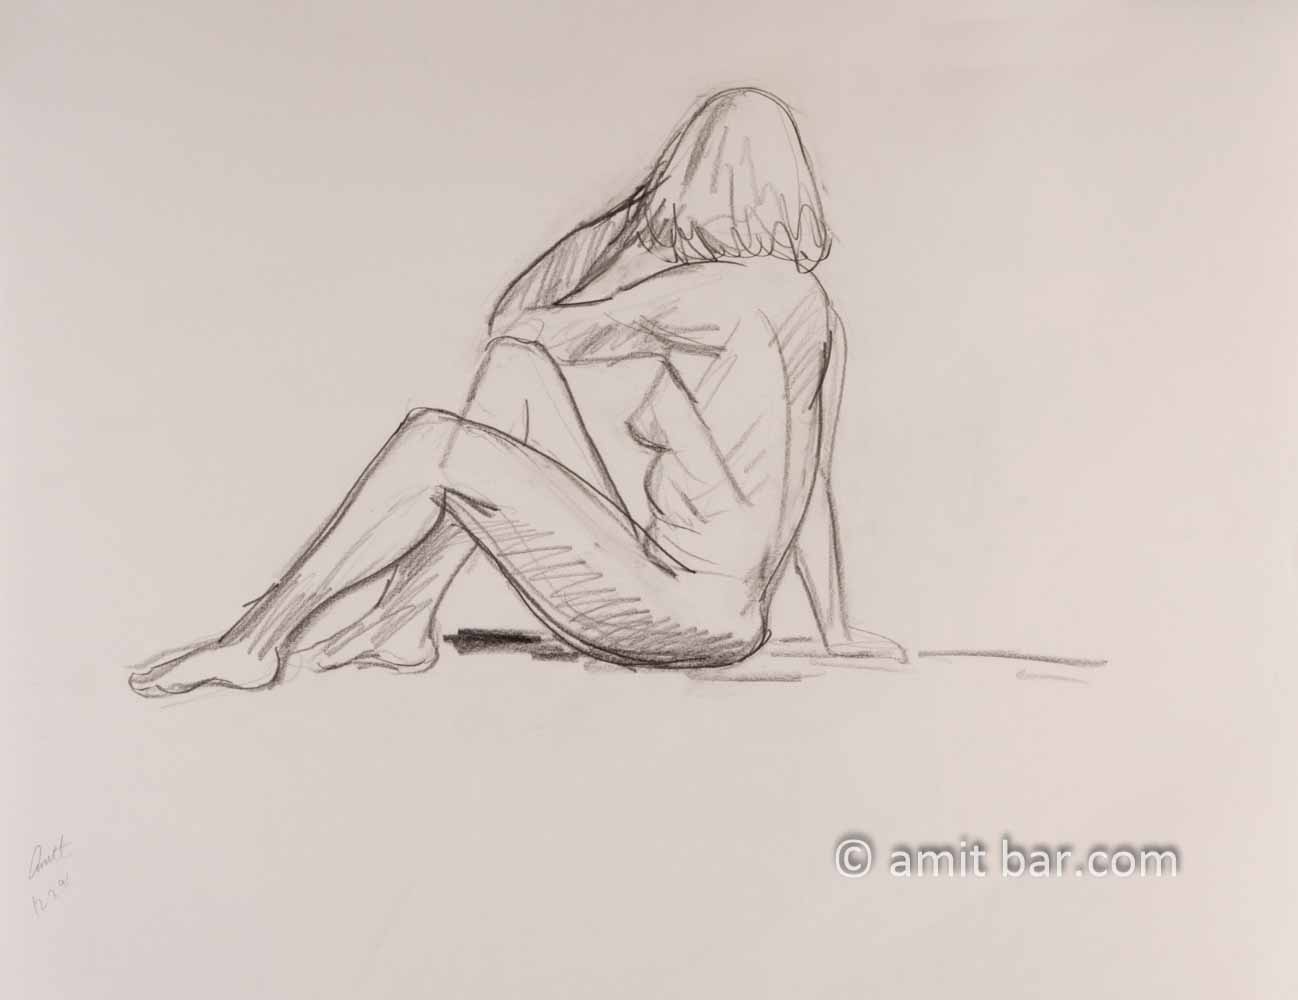 Nude figure turned away. Pencil drawing